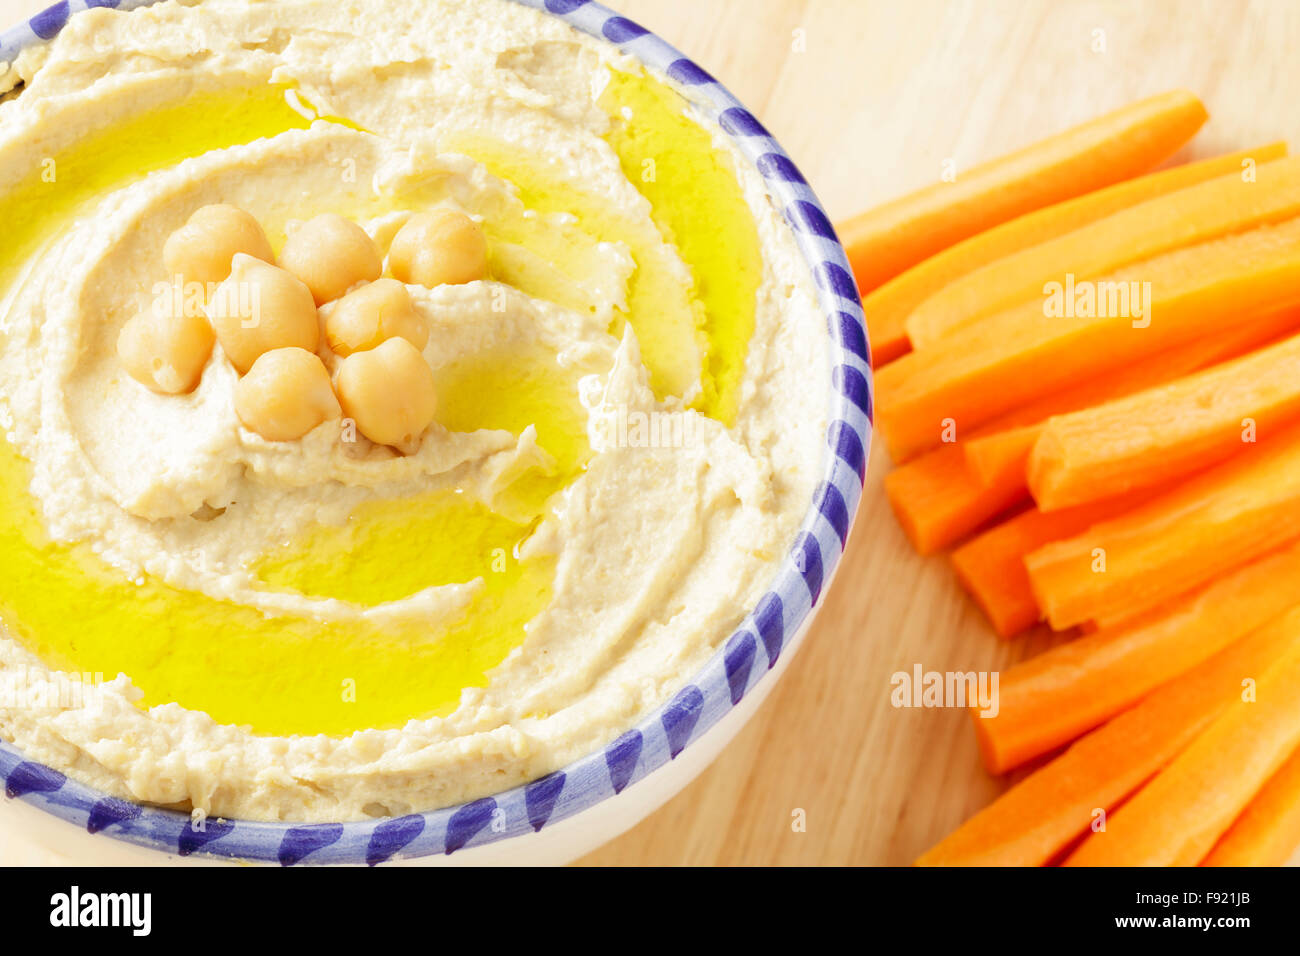 Hummus and carrot sticks Stock Photo